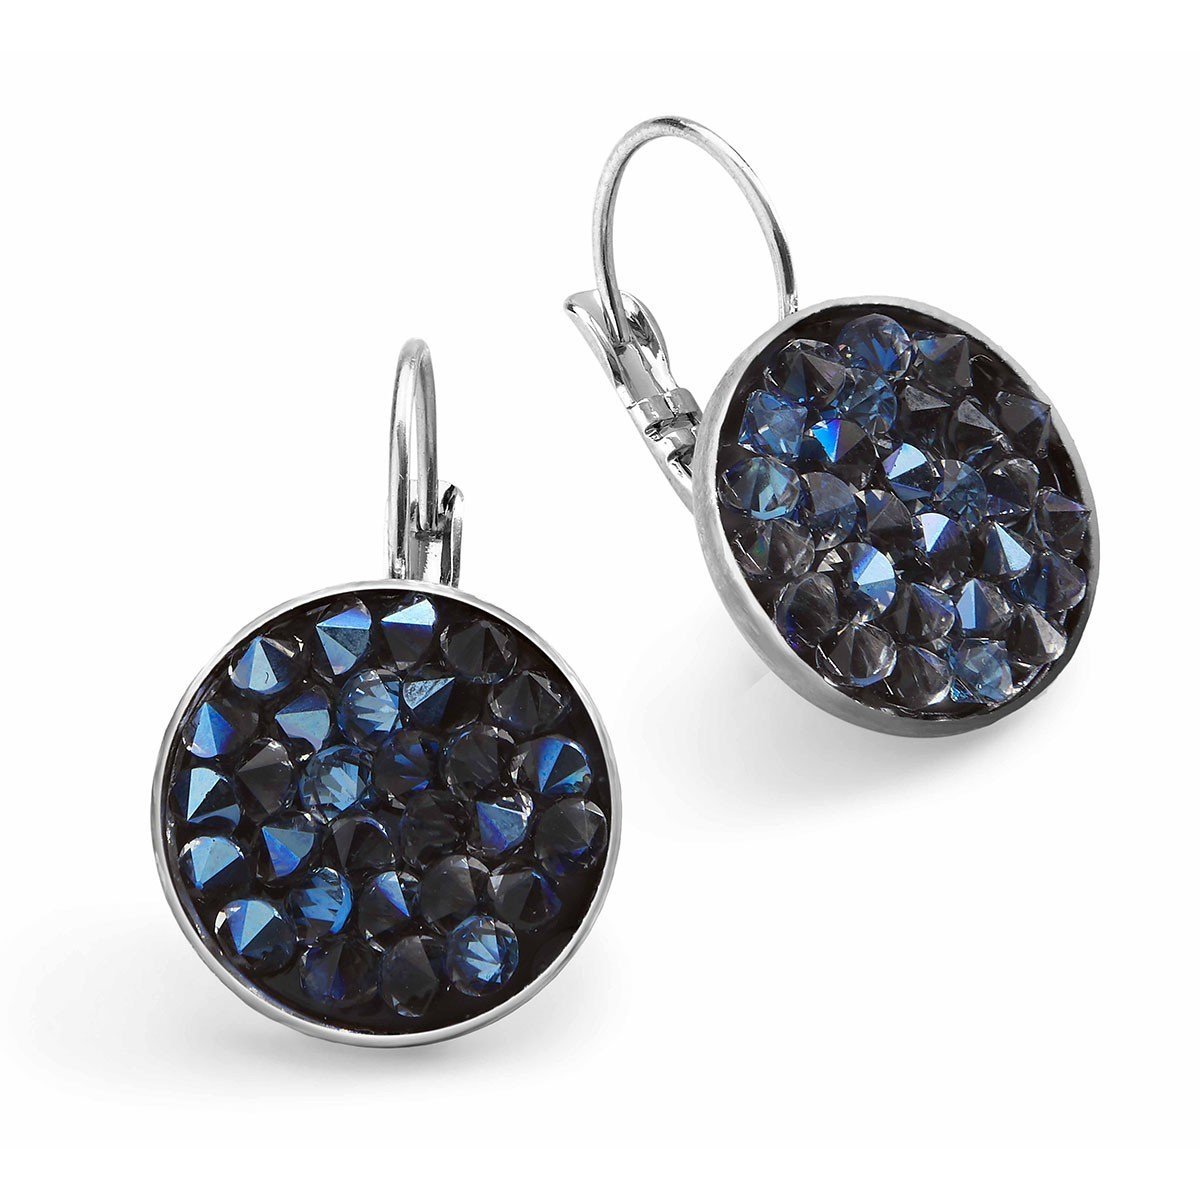 SEA Smadar Eliasaf Silver-Plated Earrings with Blue Swarovski Crystals - 1